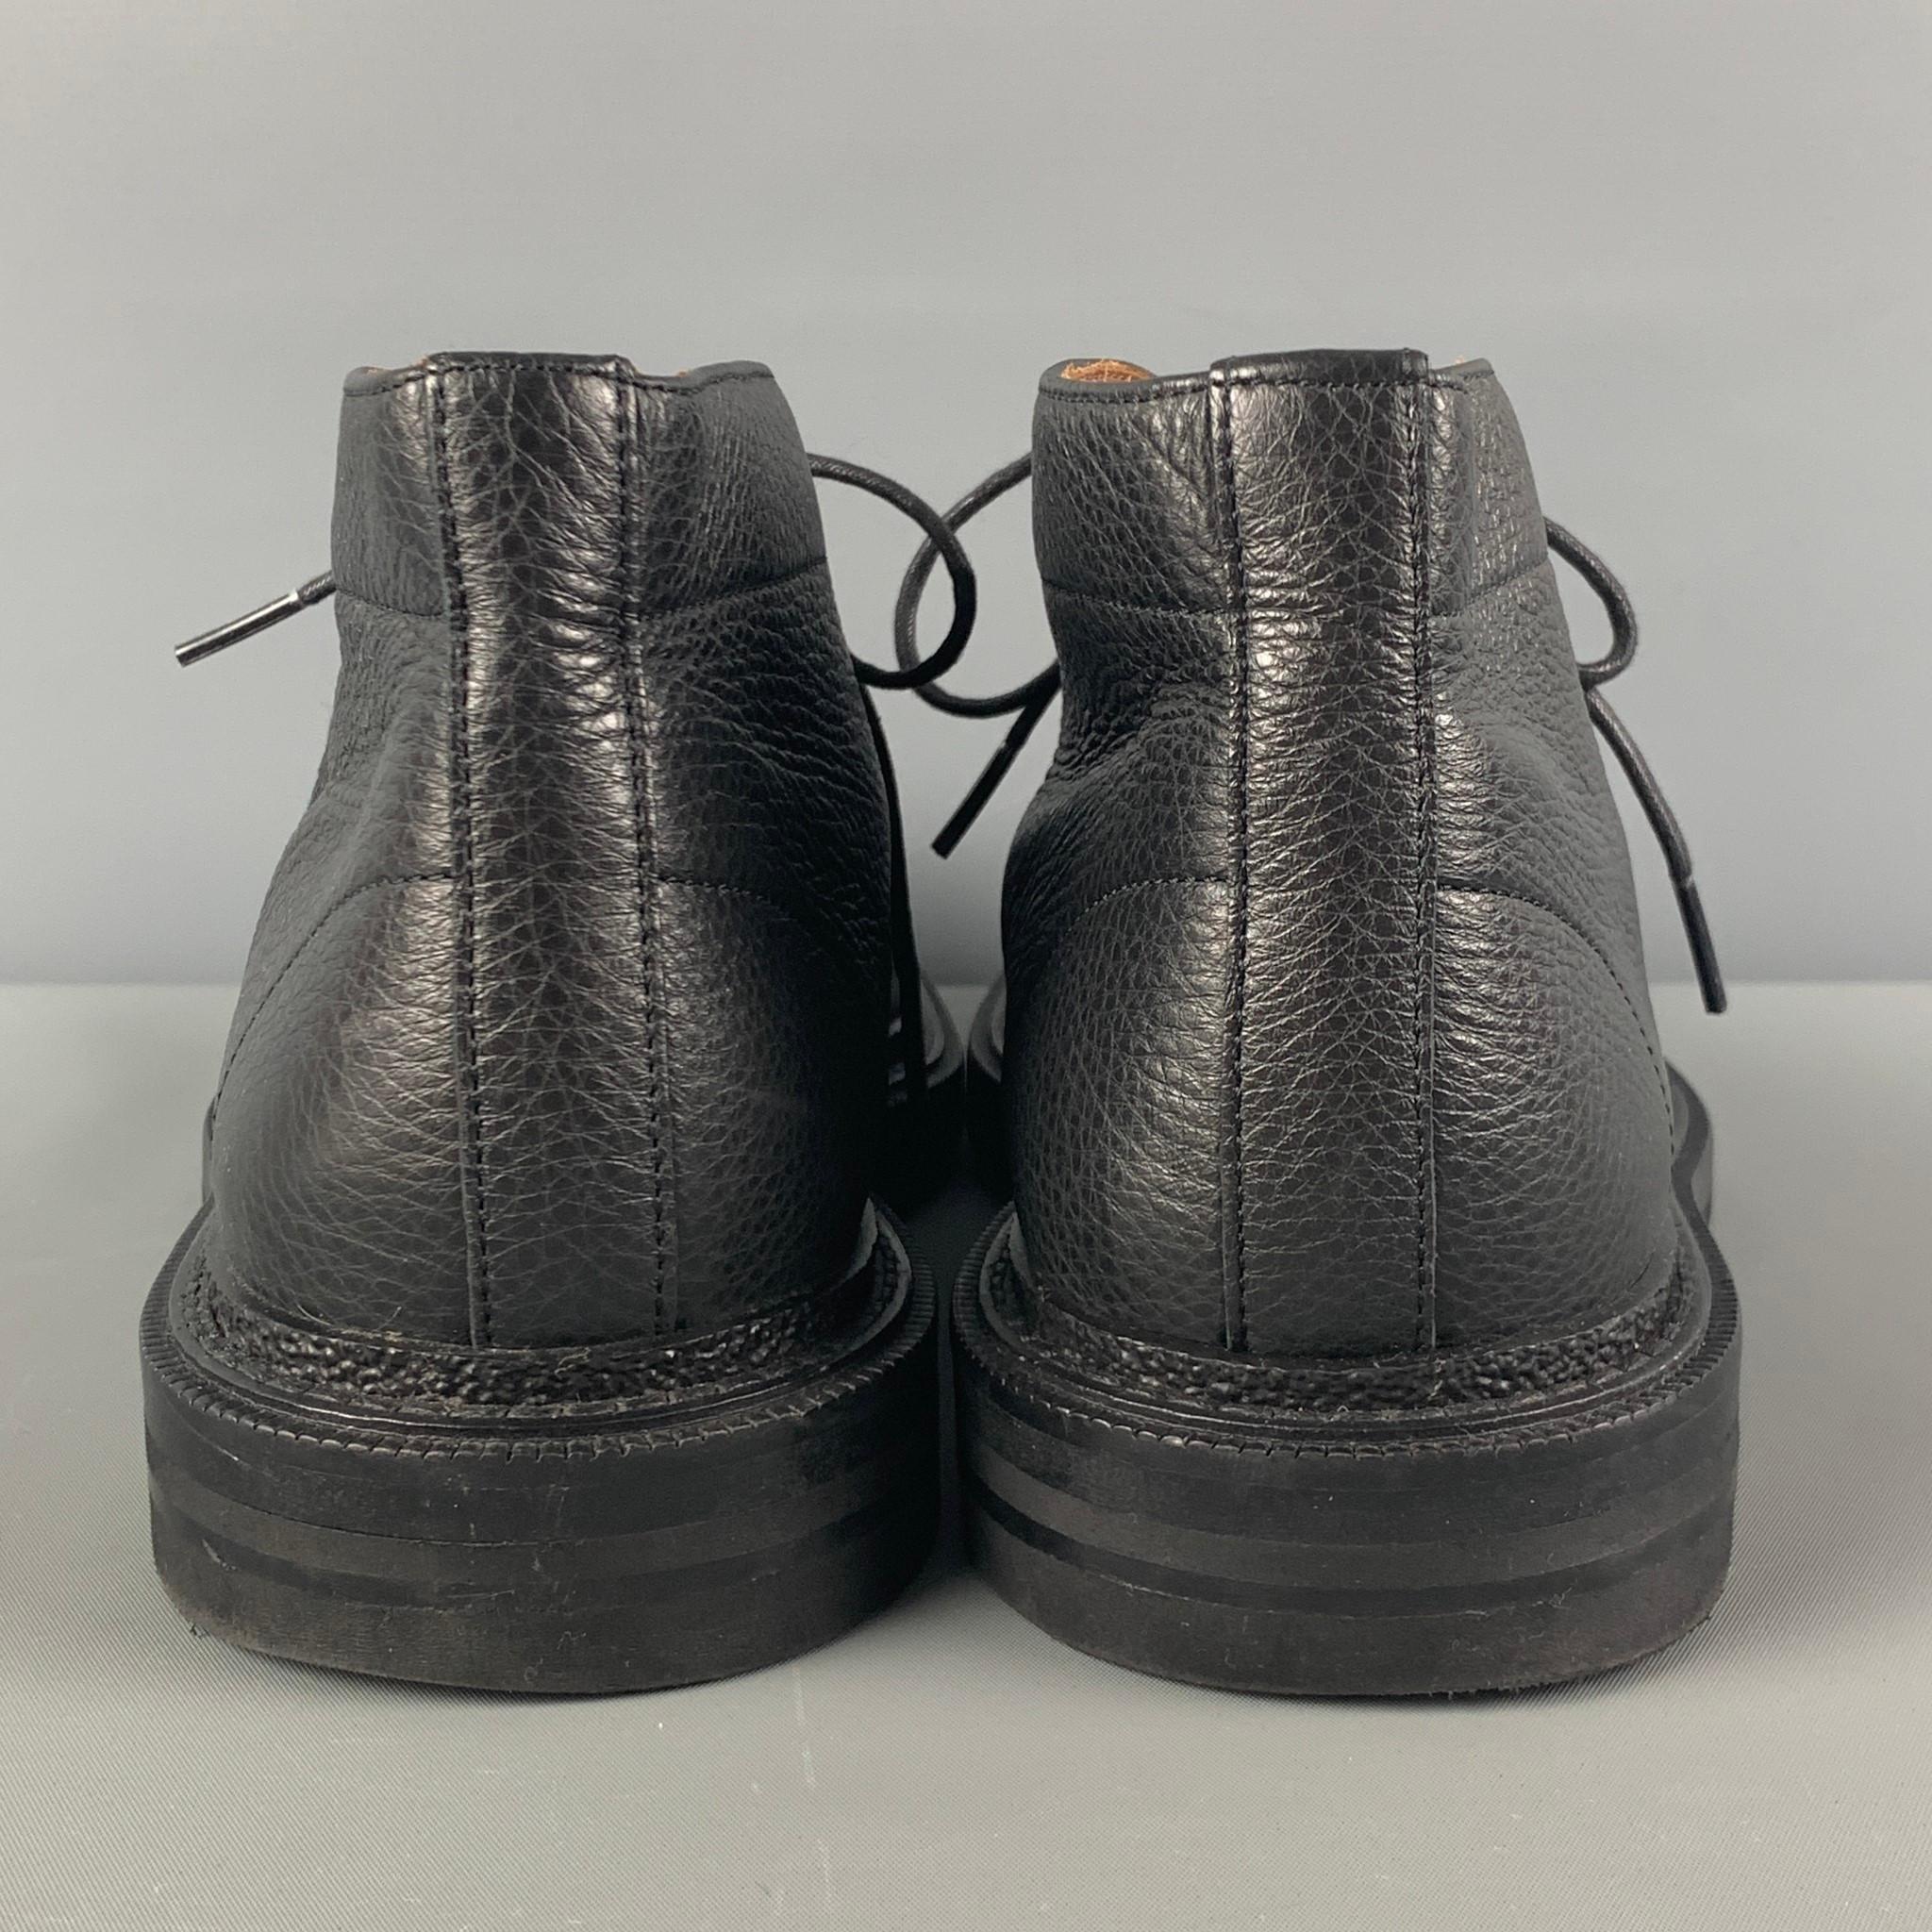 AQUATALIA Size 10.5 Black Leather Lace Up Boots 1